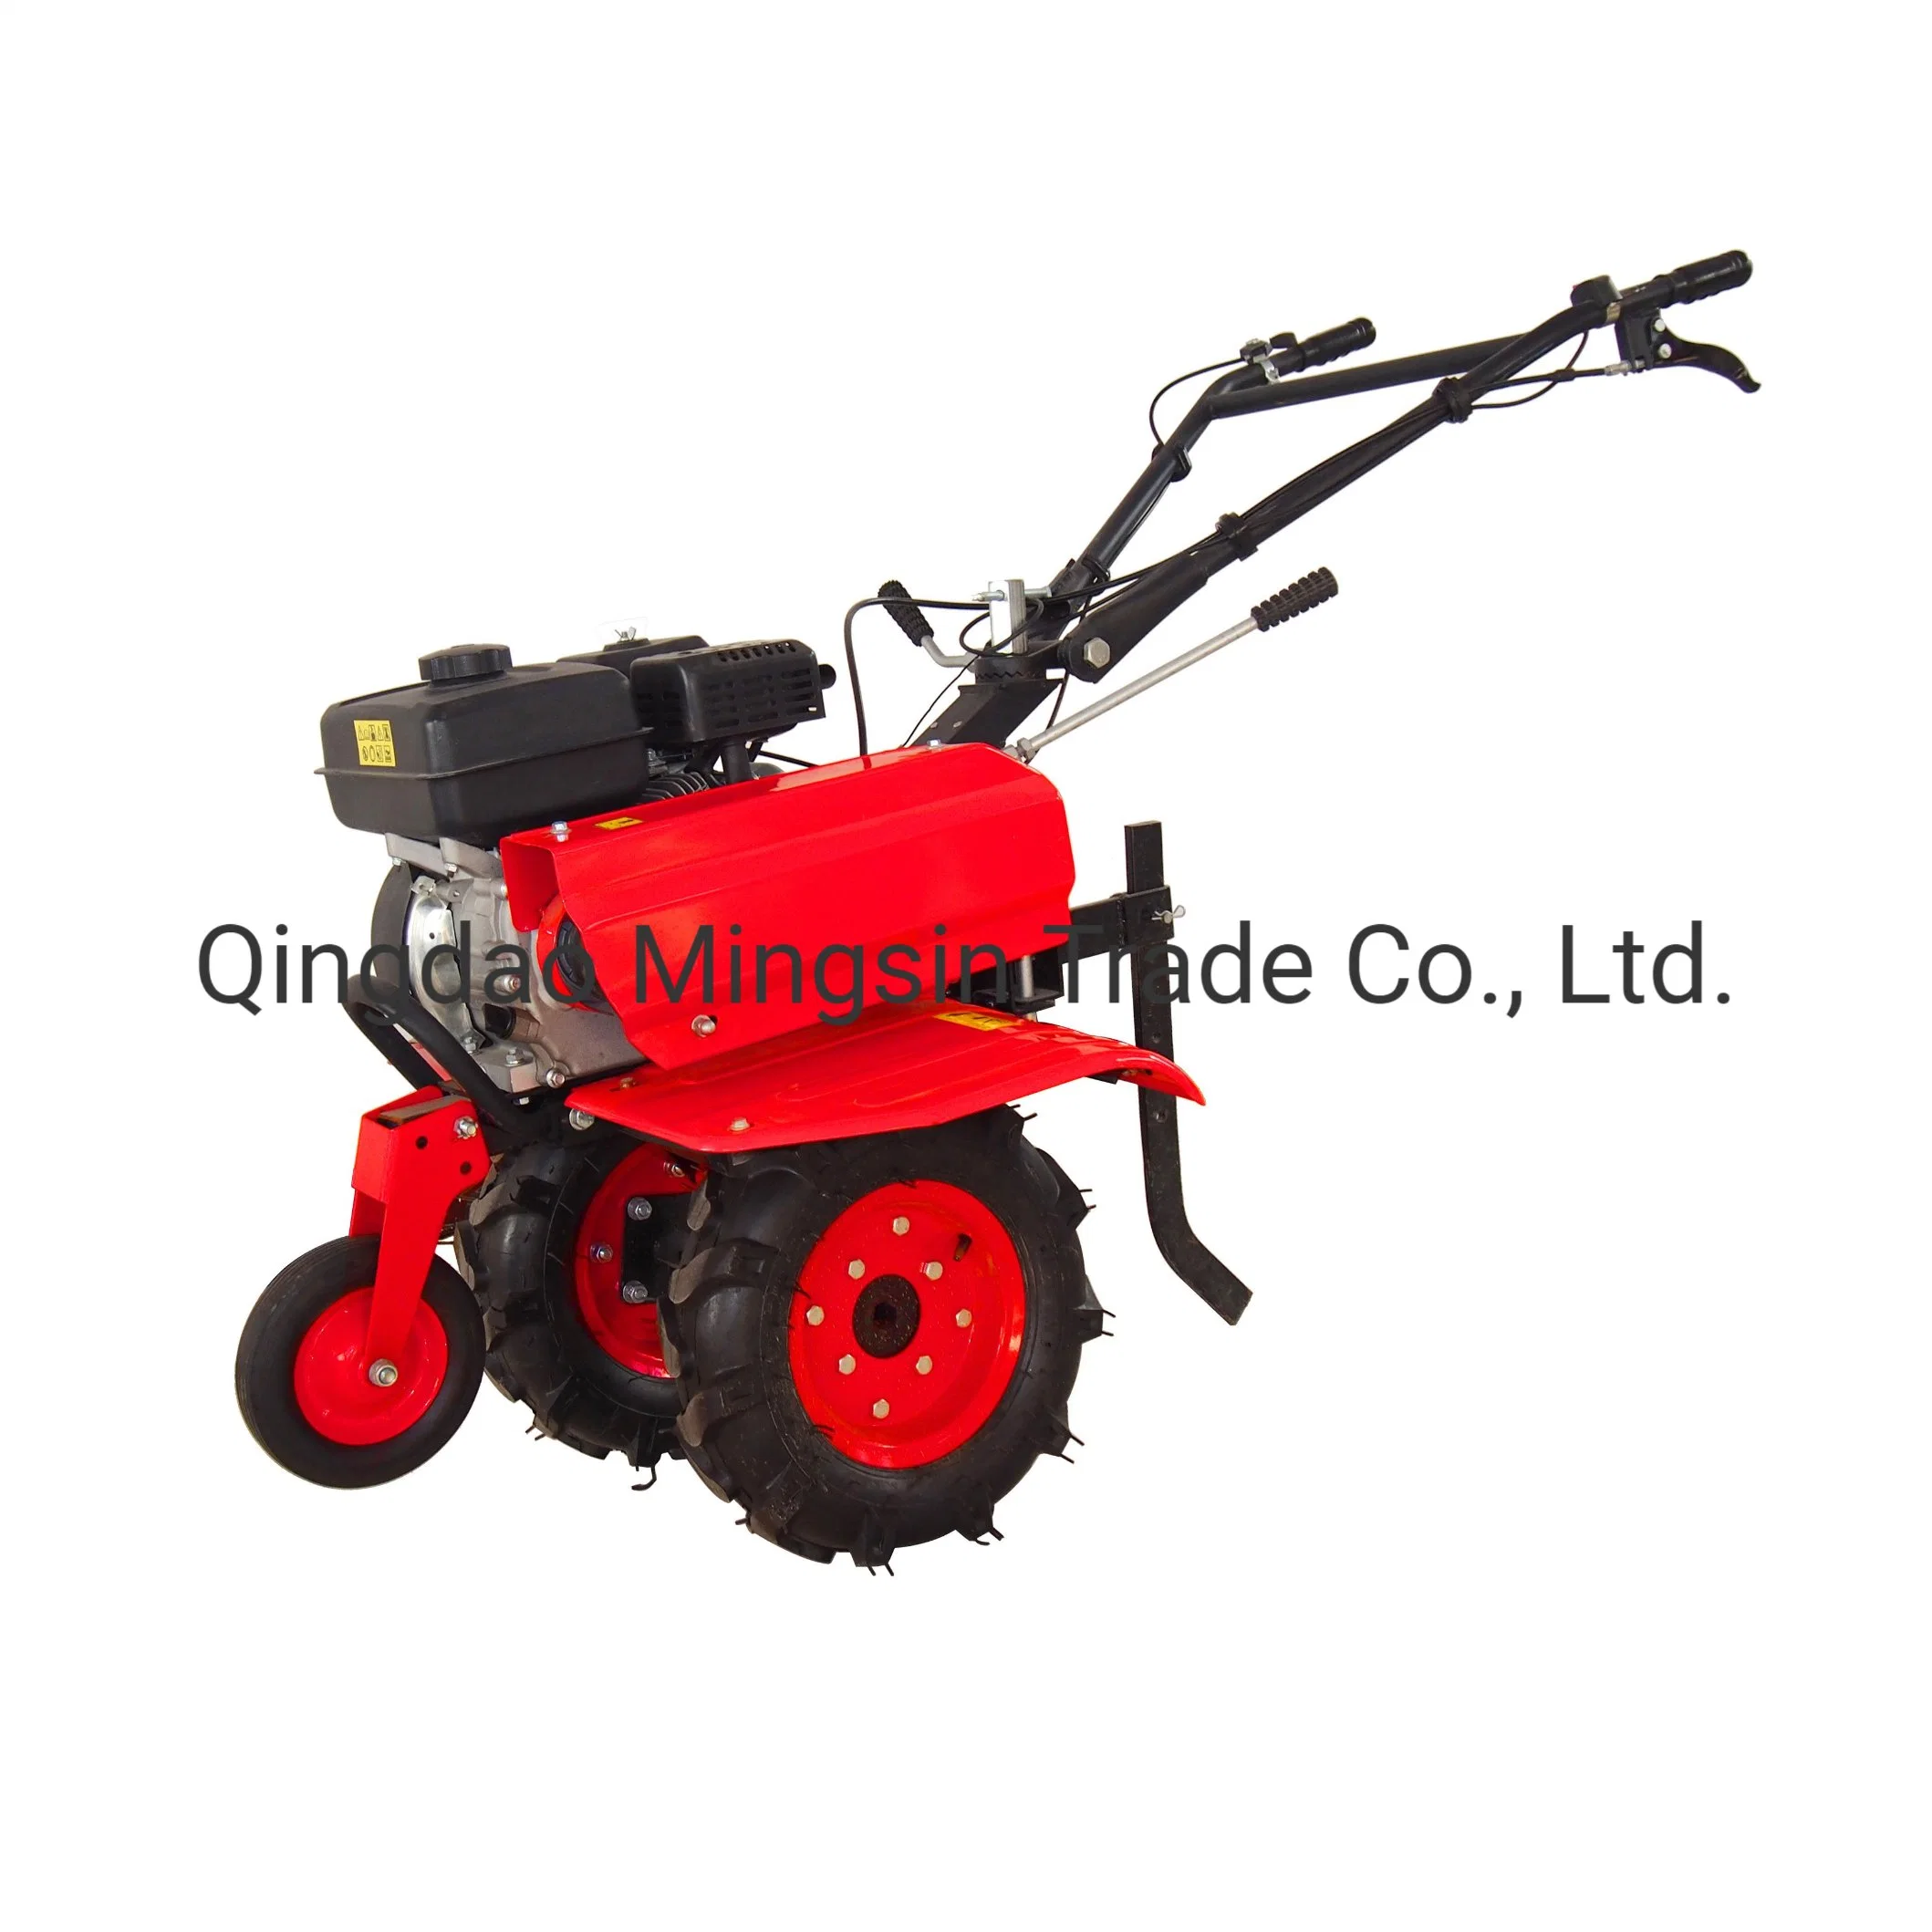 Motocultor, Cultivador, Motocultor Mini, Modelo Gt500A/Gt900A